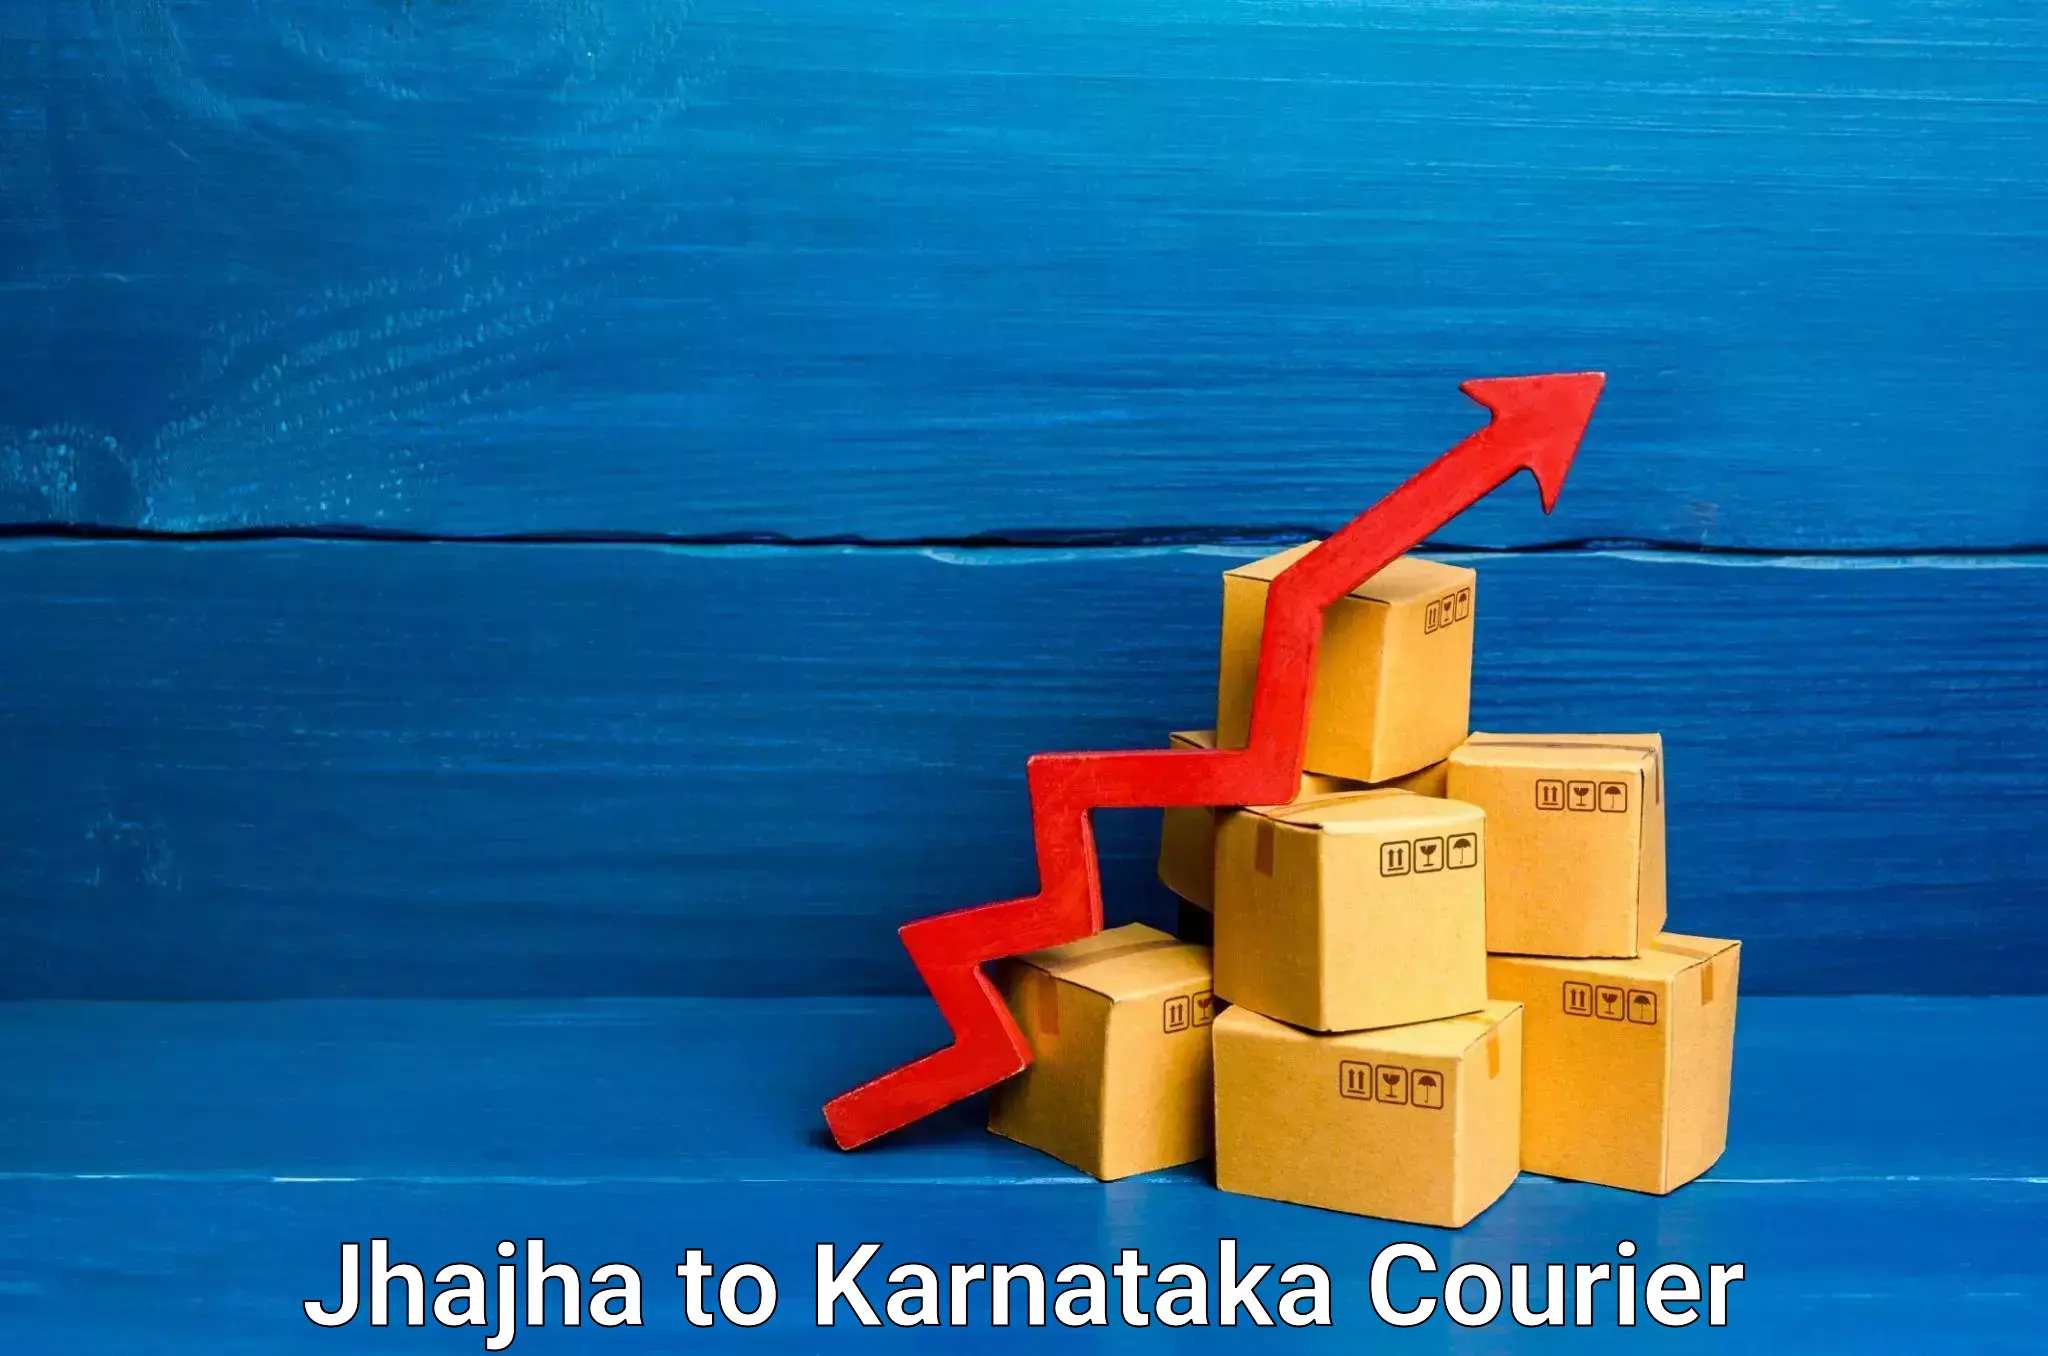 Furniture moving assistance in Jhajha to Karnataka